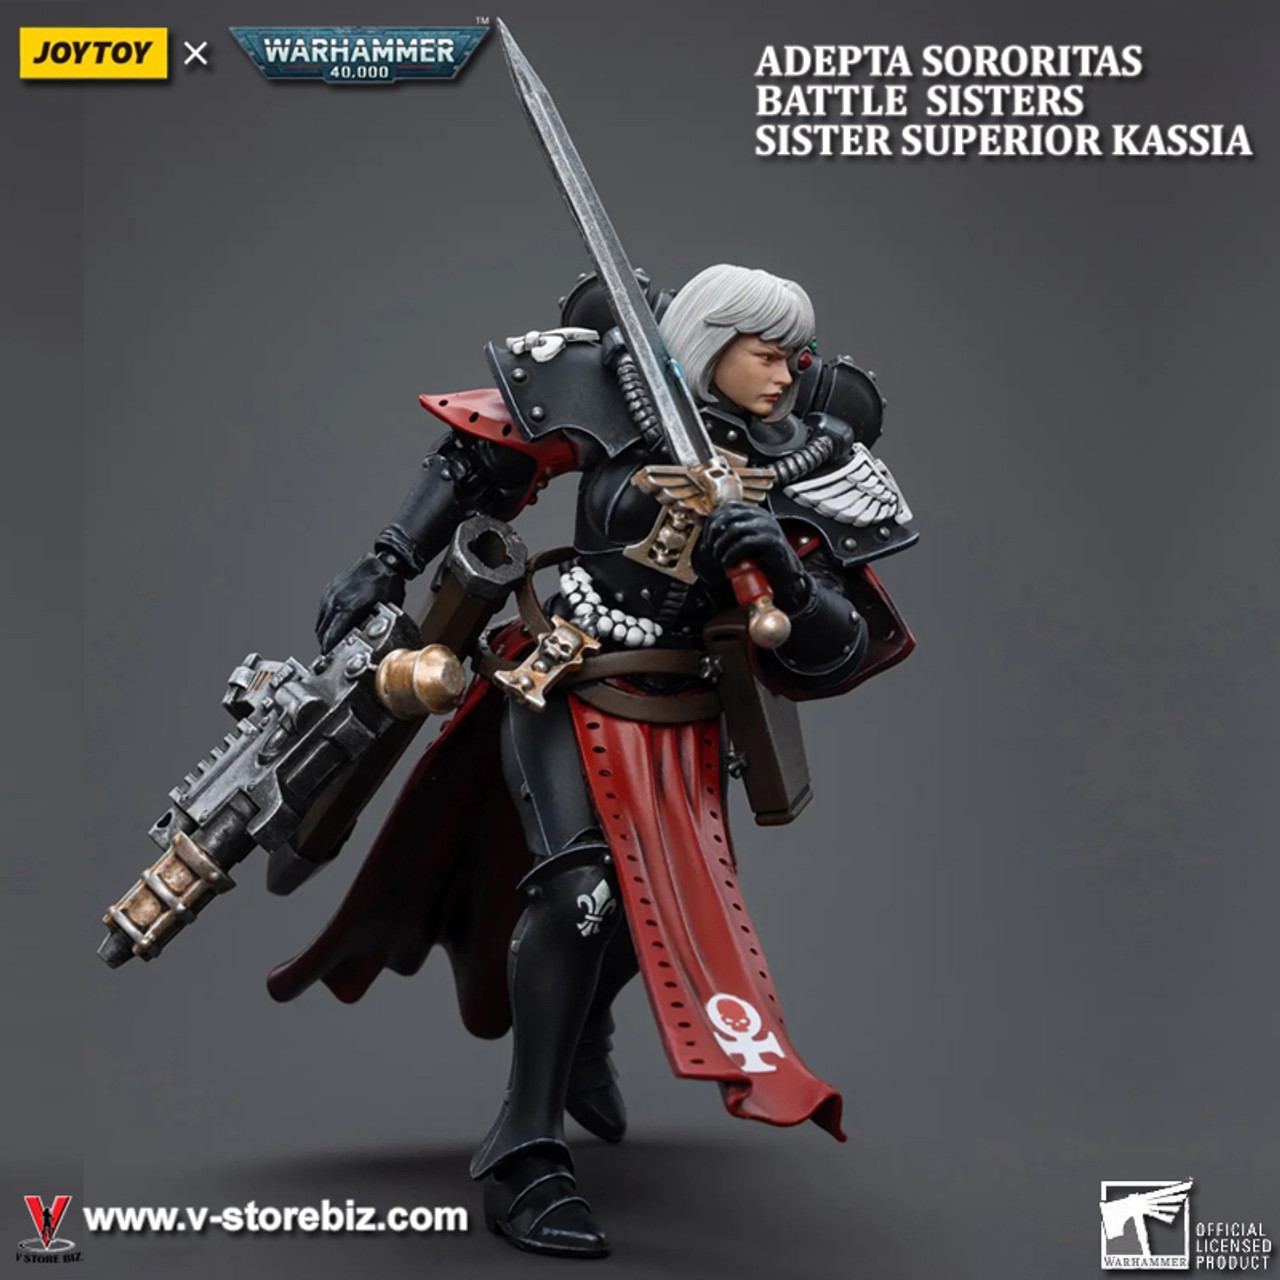 [SOLD OUT] JOYTOY Warhammer 40K Adepta Sororitas Battle Sisters - Sister  Superior Kassia